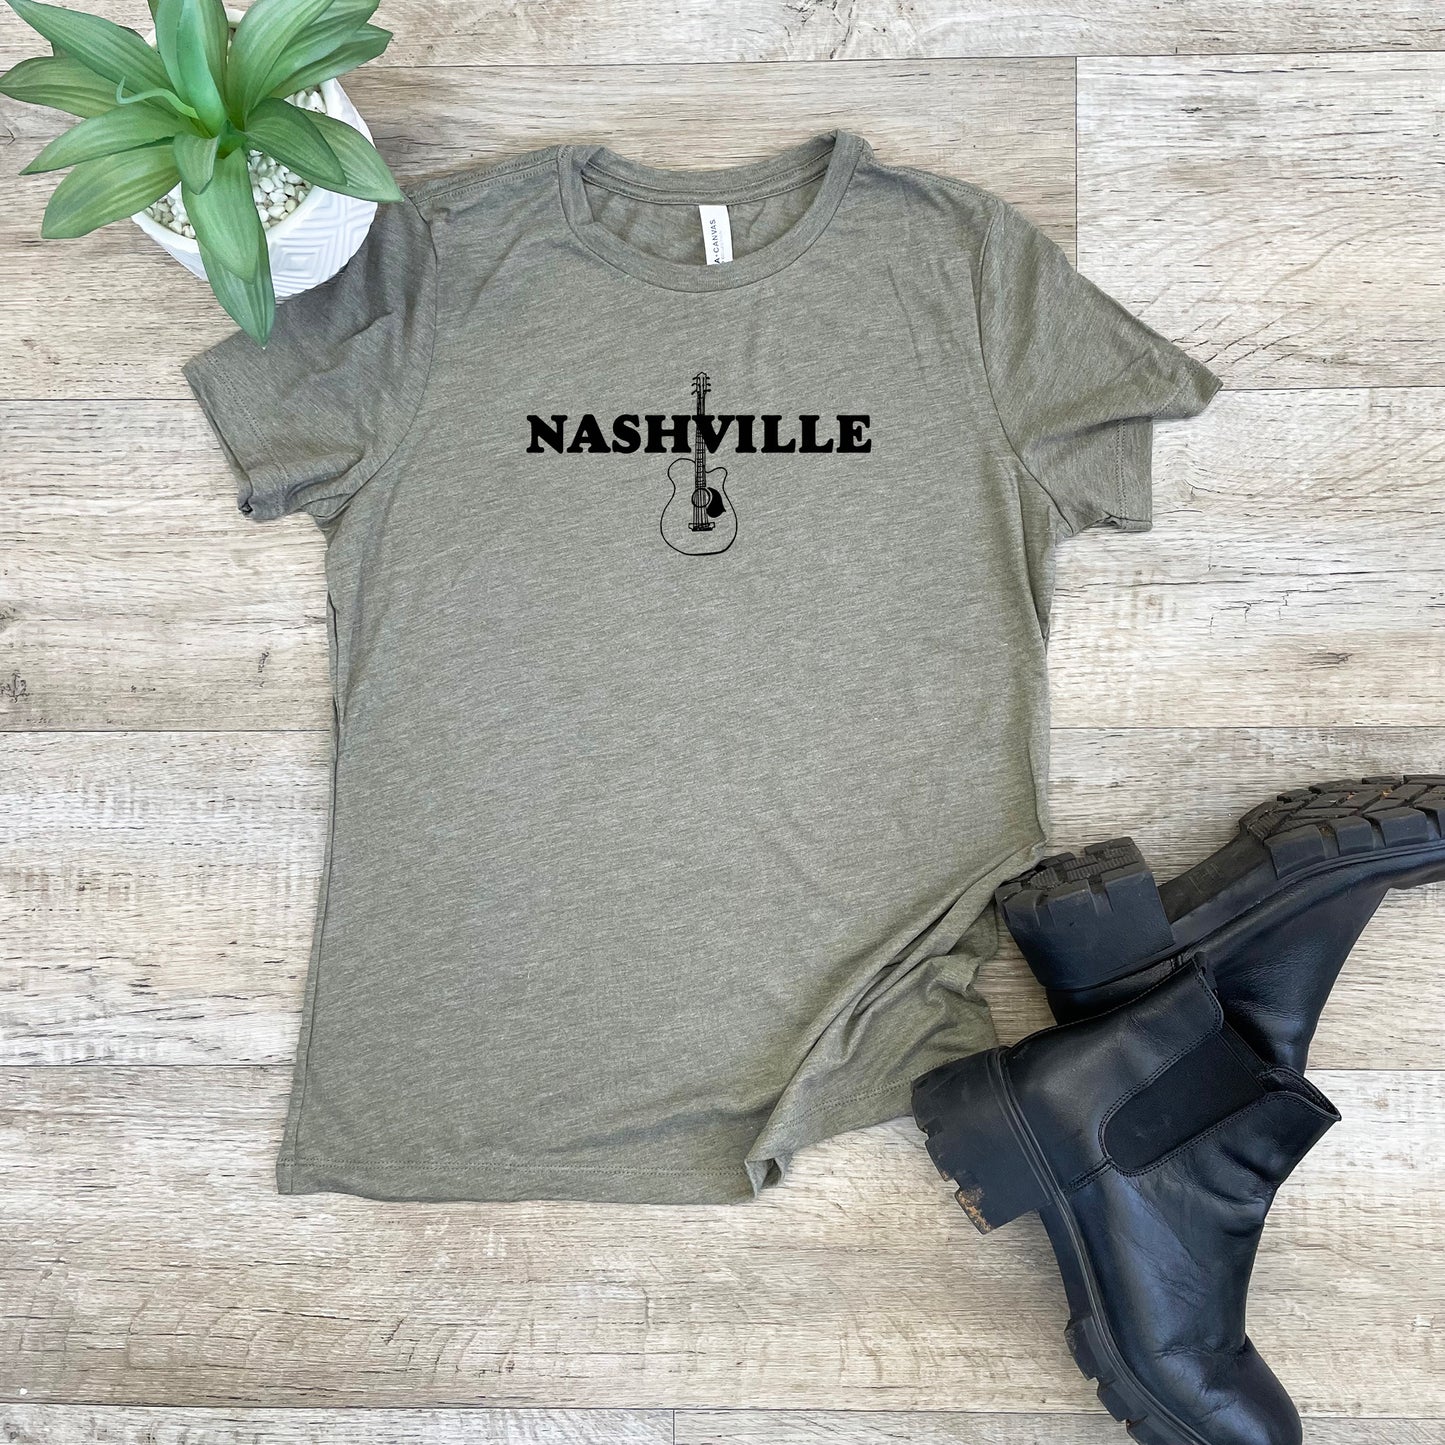 Nashville (TN) - Women's Crew Tee - Olive or Dusty Blue